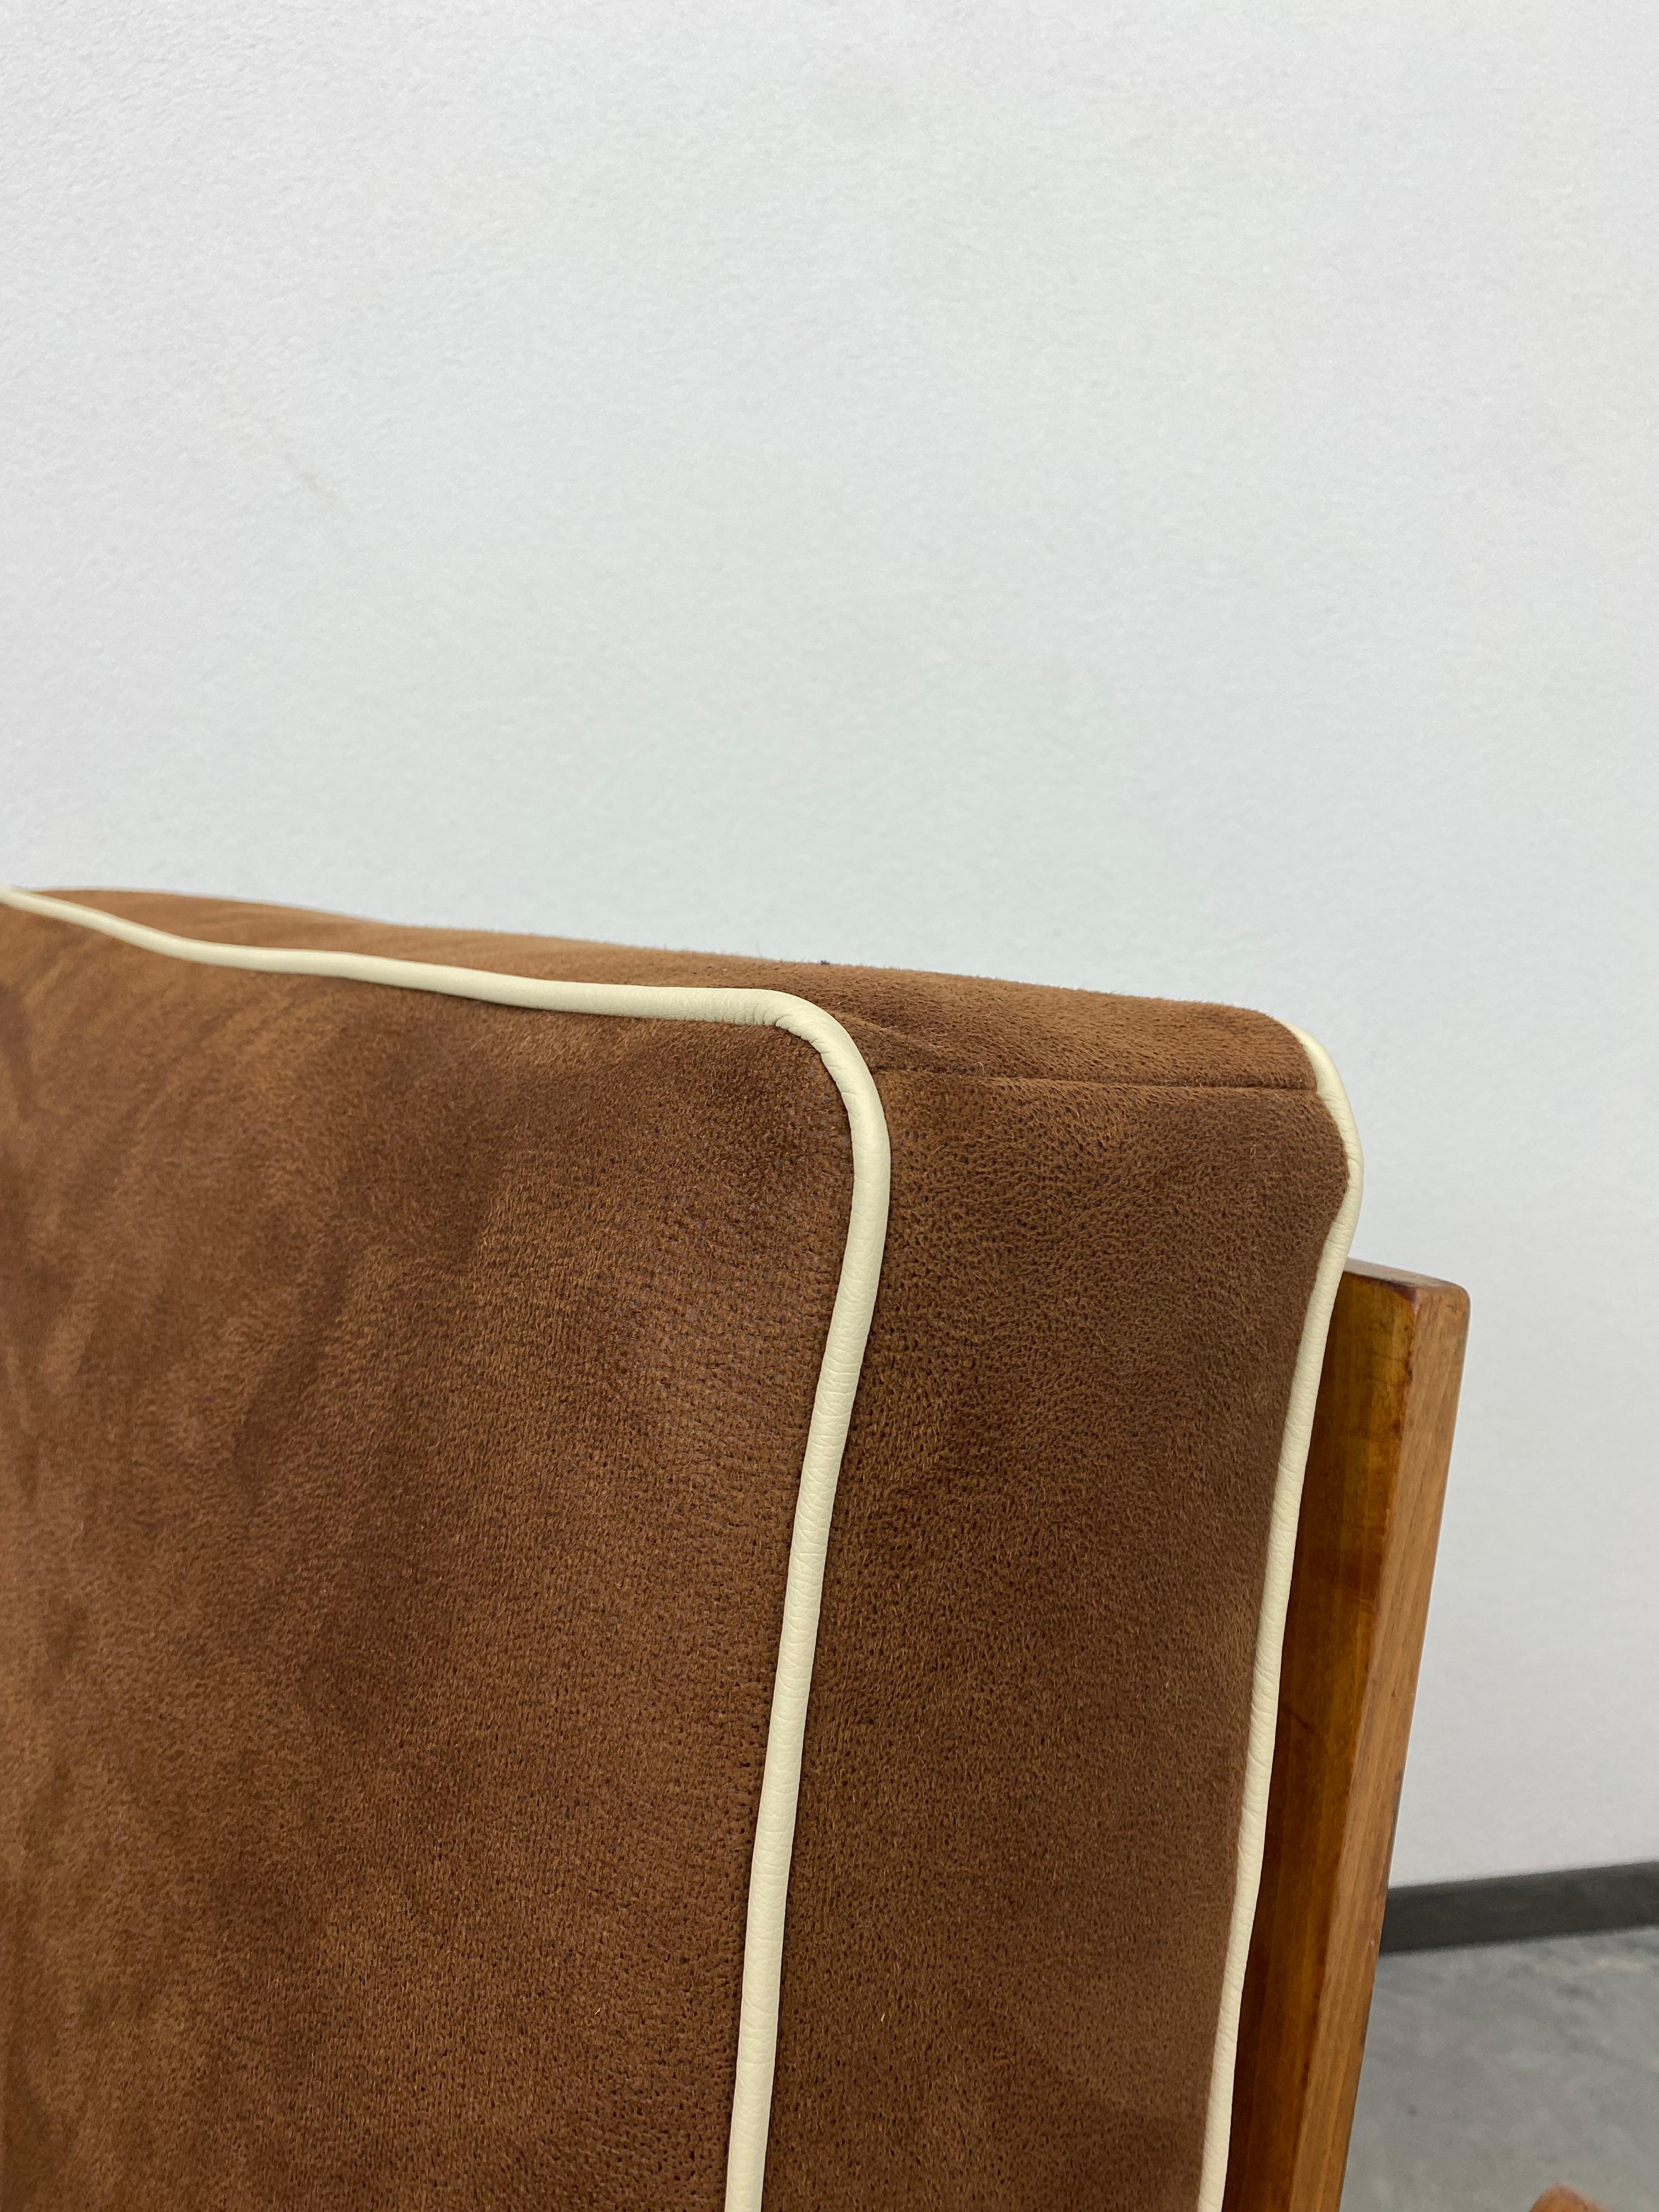 Adjustable art deco armchairs In Good Condition For Sale In Banská Štiavnica, SK